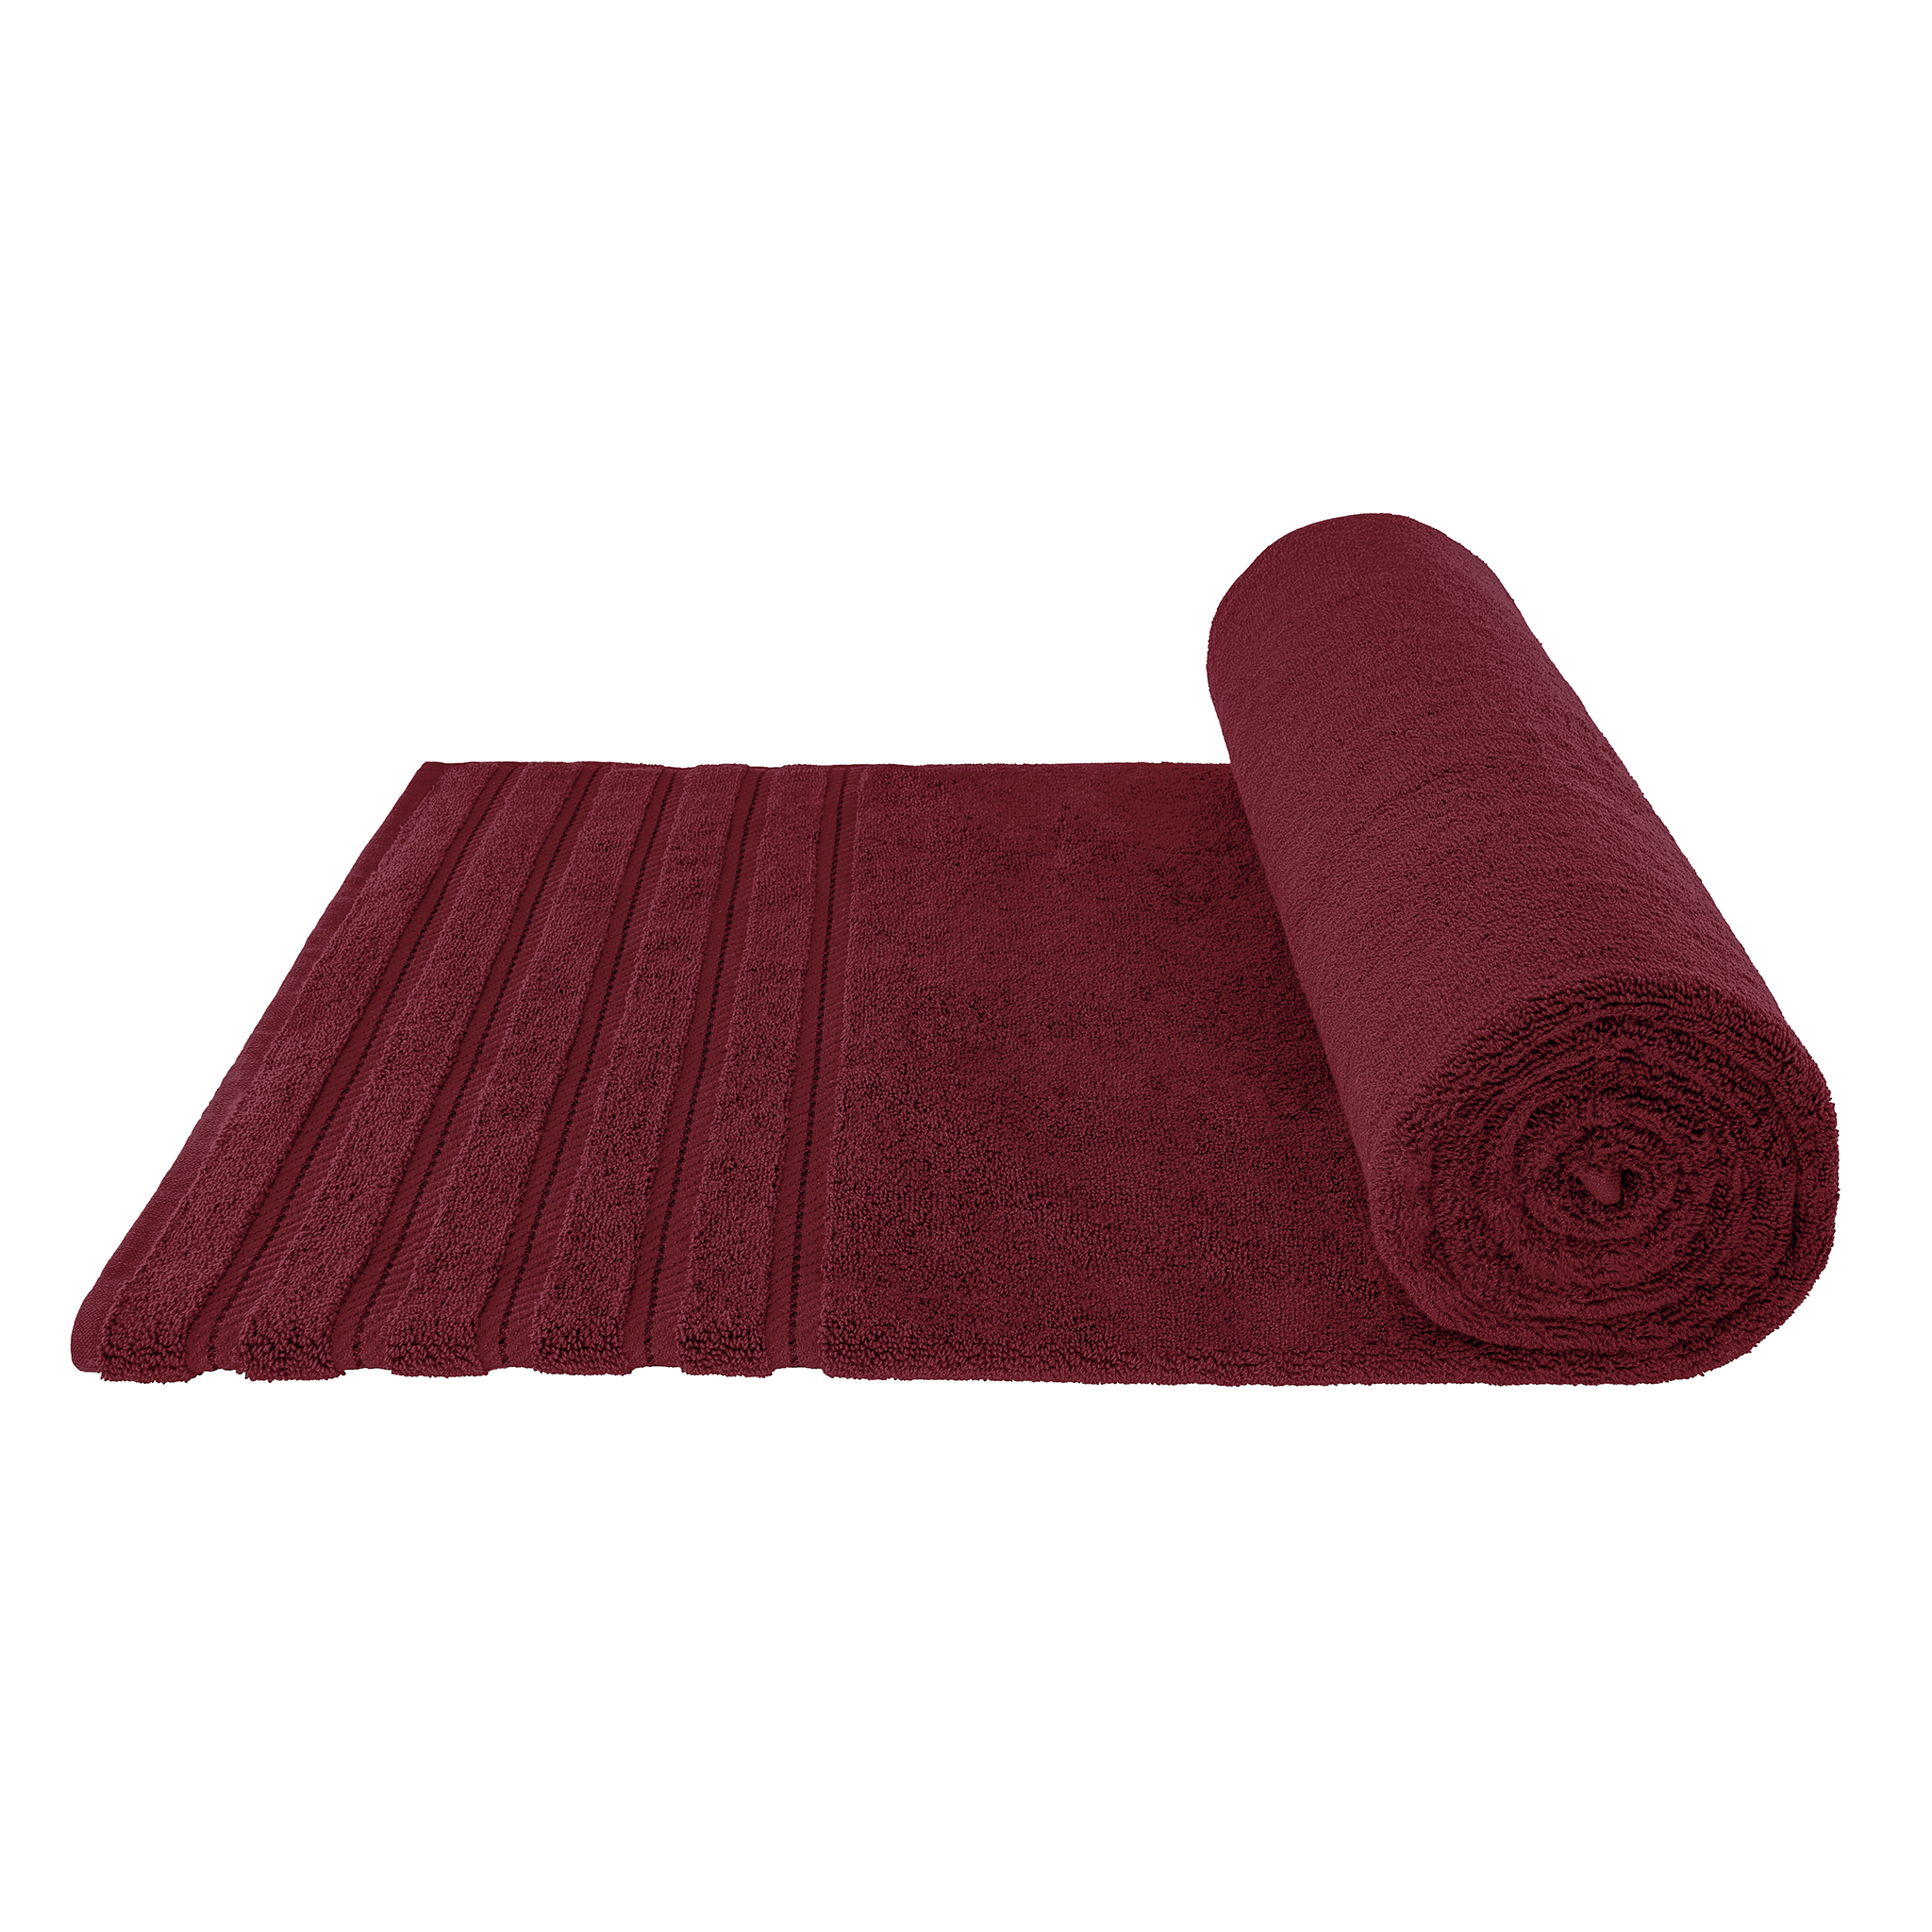 American Soft Linen - 35x70 Jumbo Bath Sheet Turkish Bath Towel - 16 Piece Case Pack - Bordeaux-Red - 6